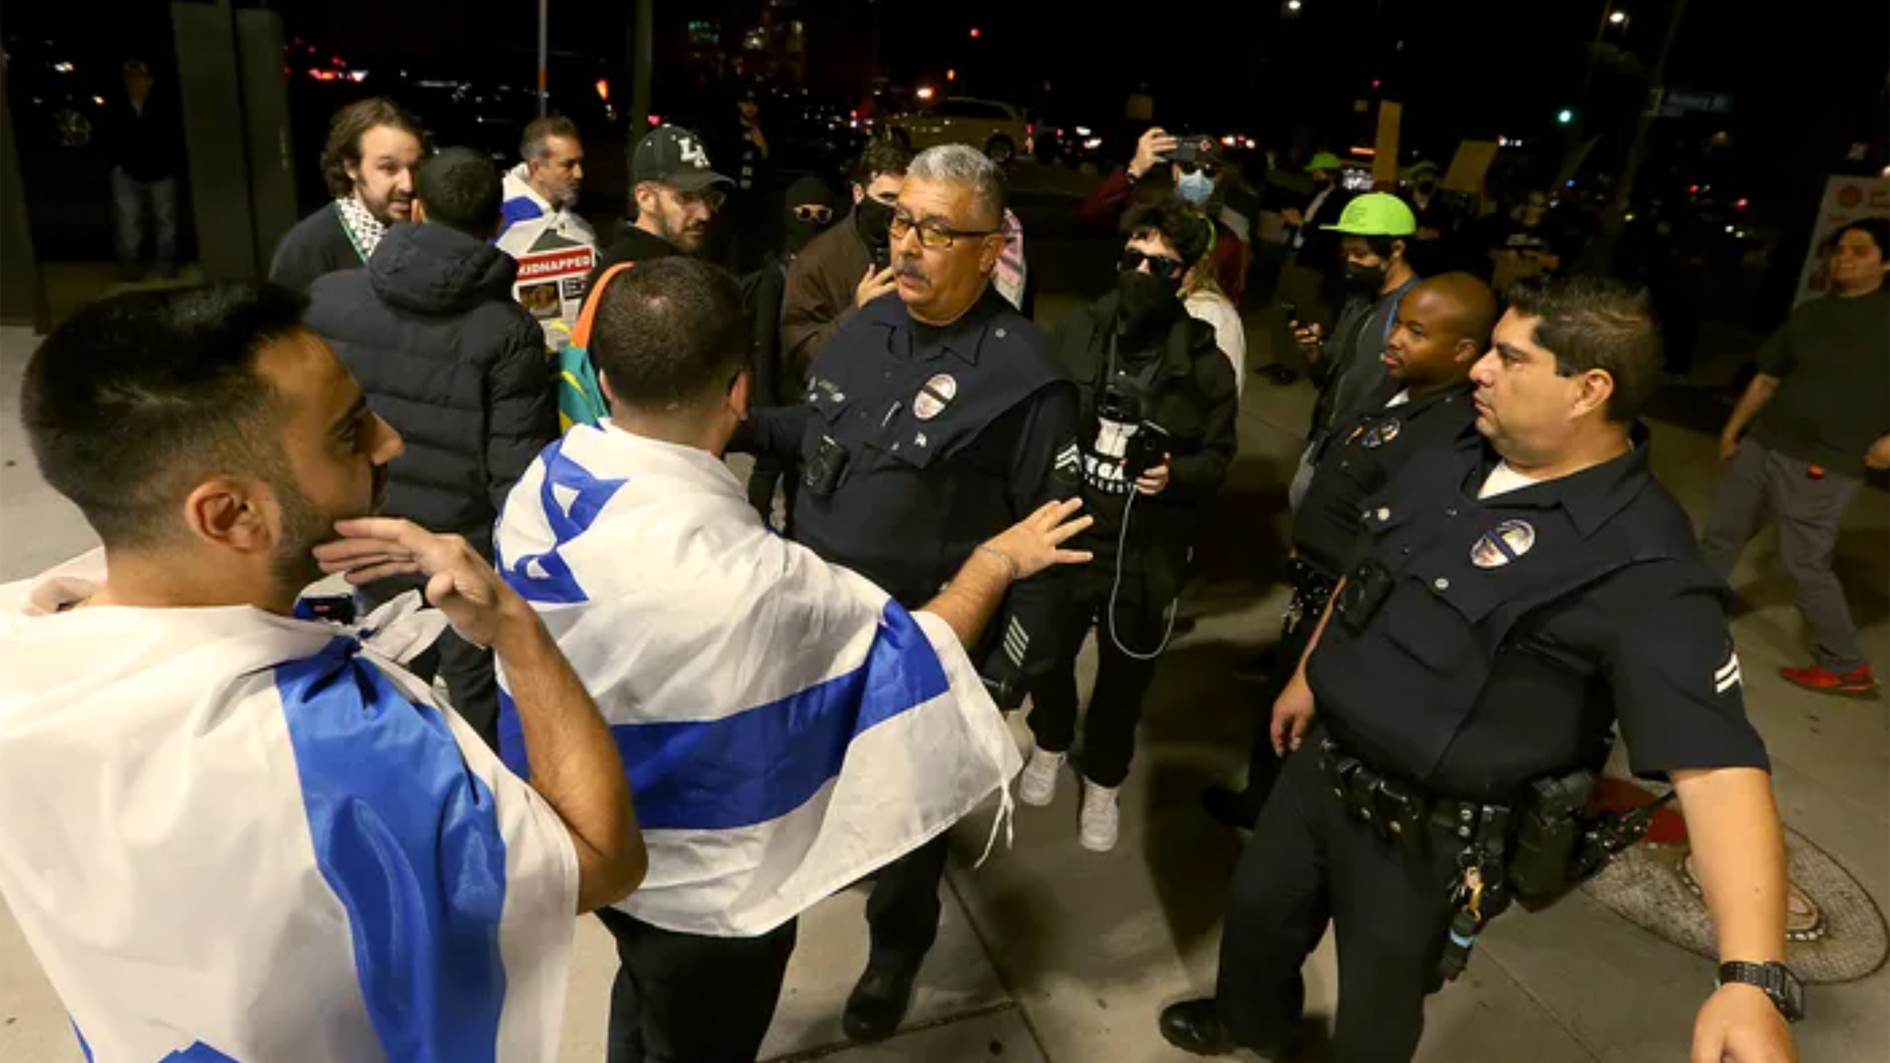 ضباط شرطة لوس أنجلوس يتفاعلون مع مؤيدين ومناهضين لإسرائيل خارج متحف التسامح في لوس أنجلوس. (غيتي إيماجز)